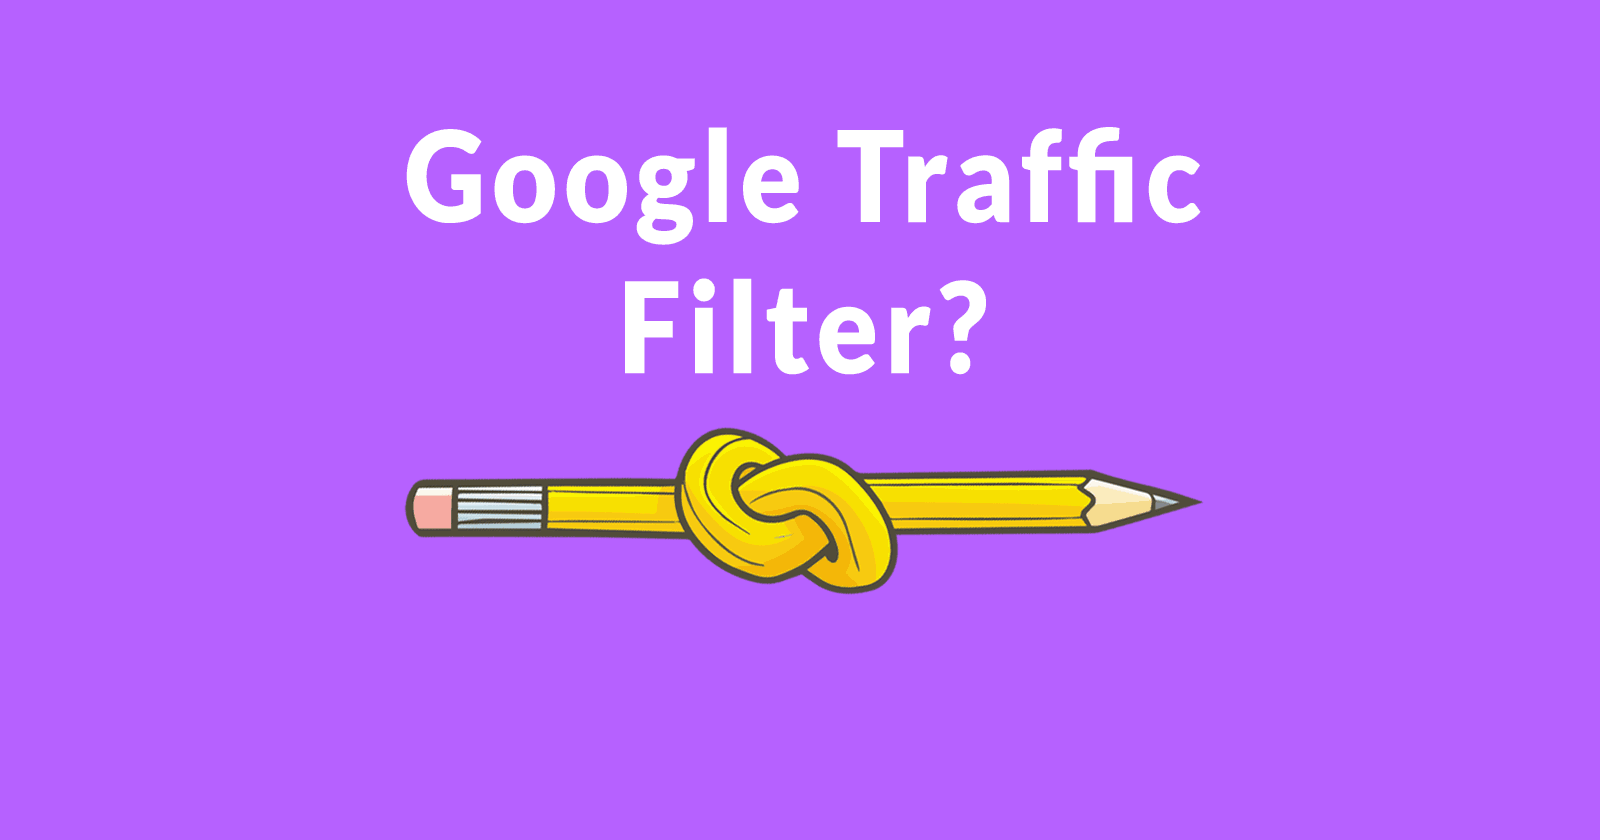 Google Traffic Filters?